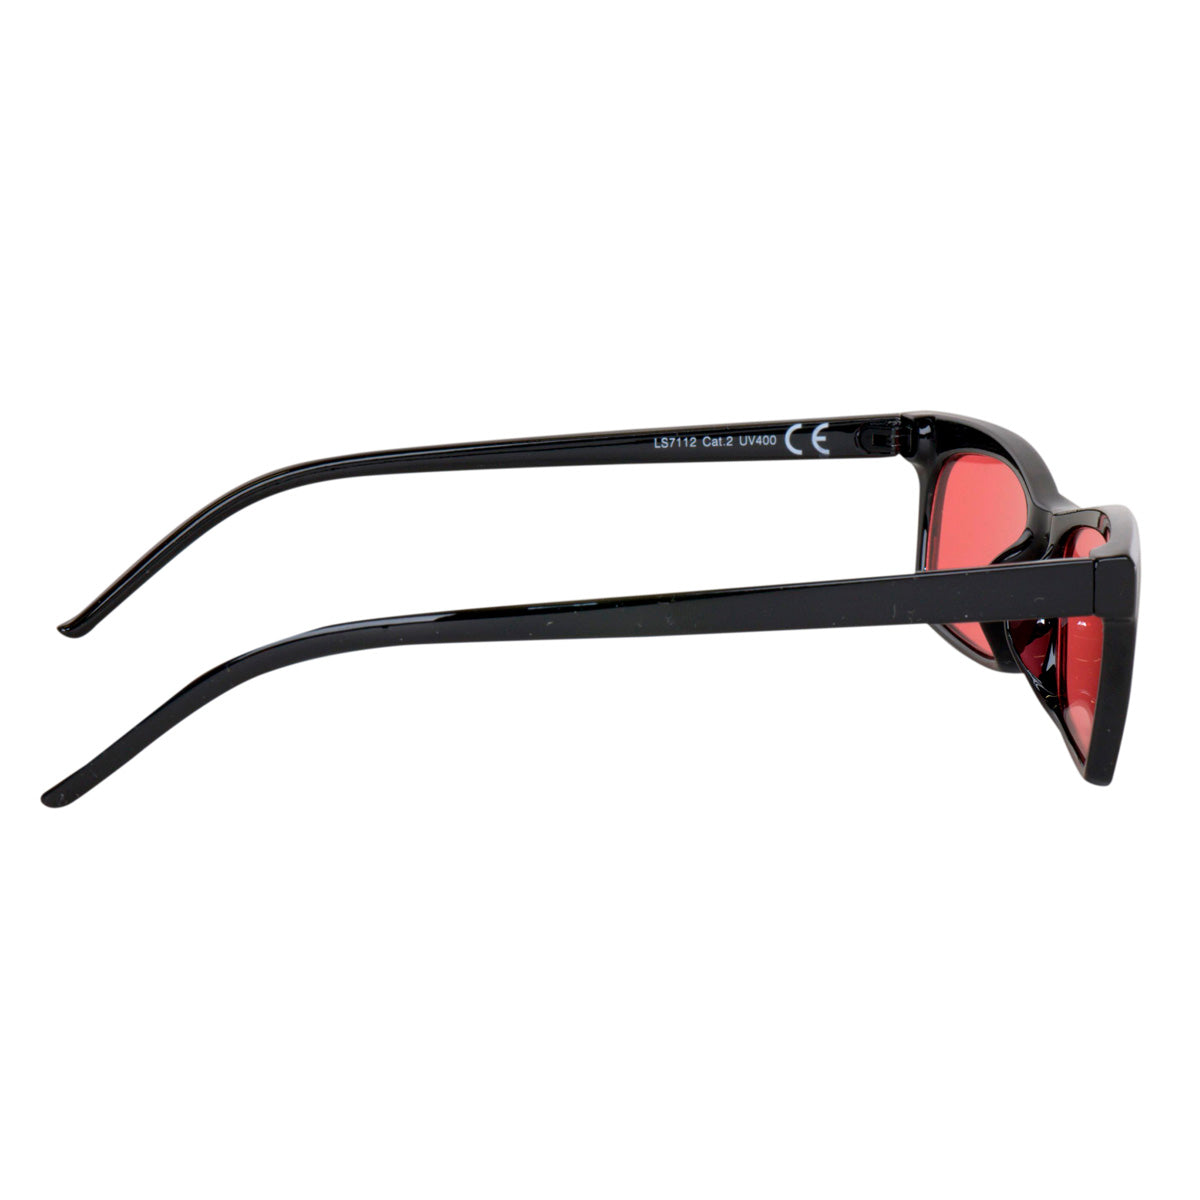 Low angular square sunglasses